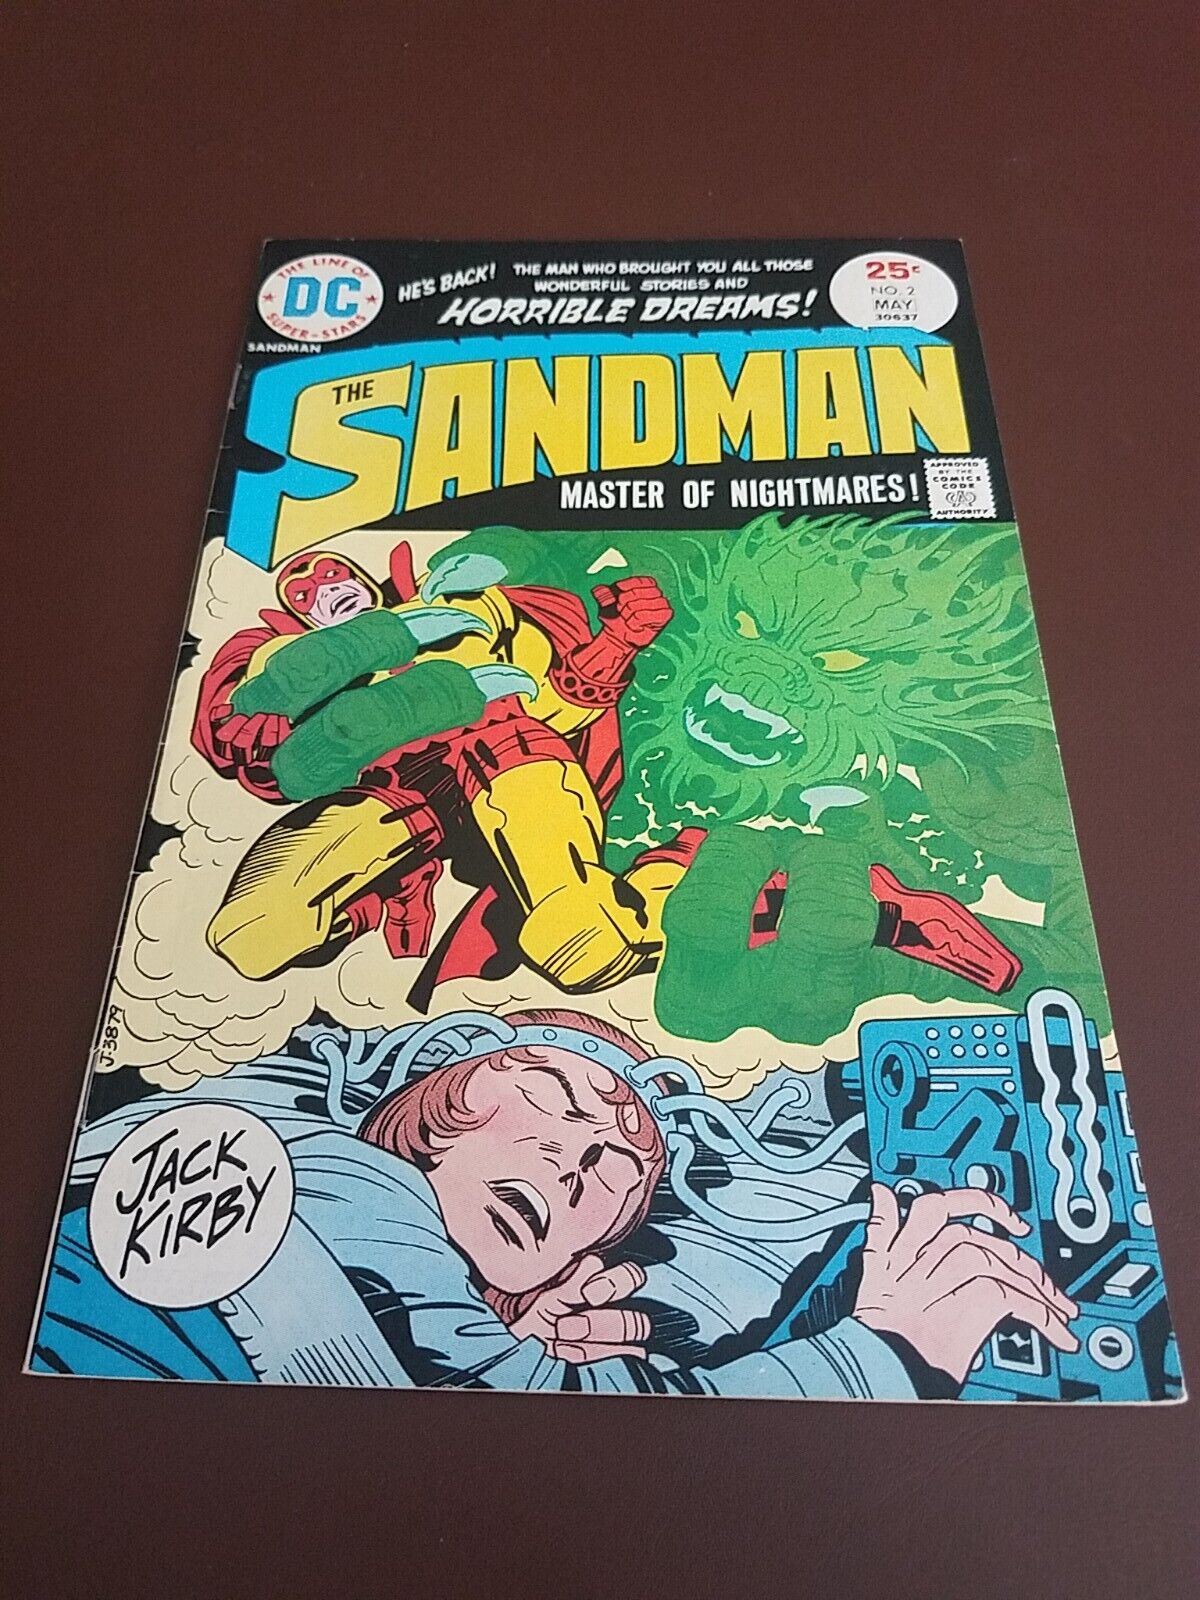 1975 DC Comics The Sandman #2 Master of Nightmares Comic Book - Jack Kirby VG